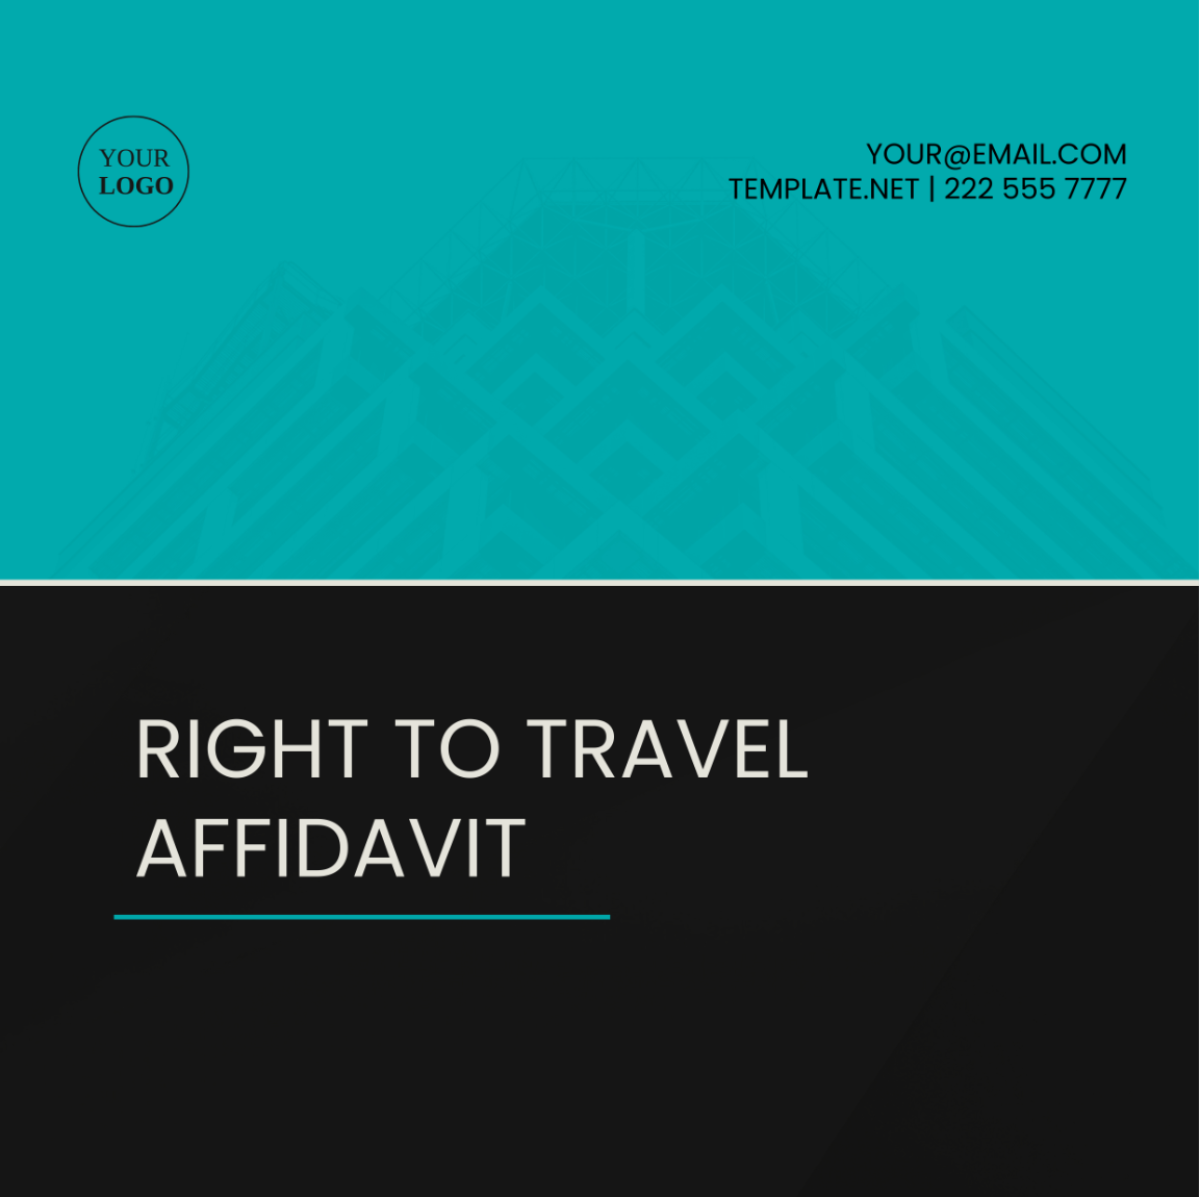 Right To Travel Affidavit Template